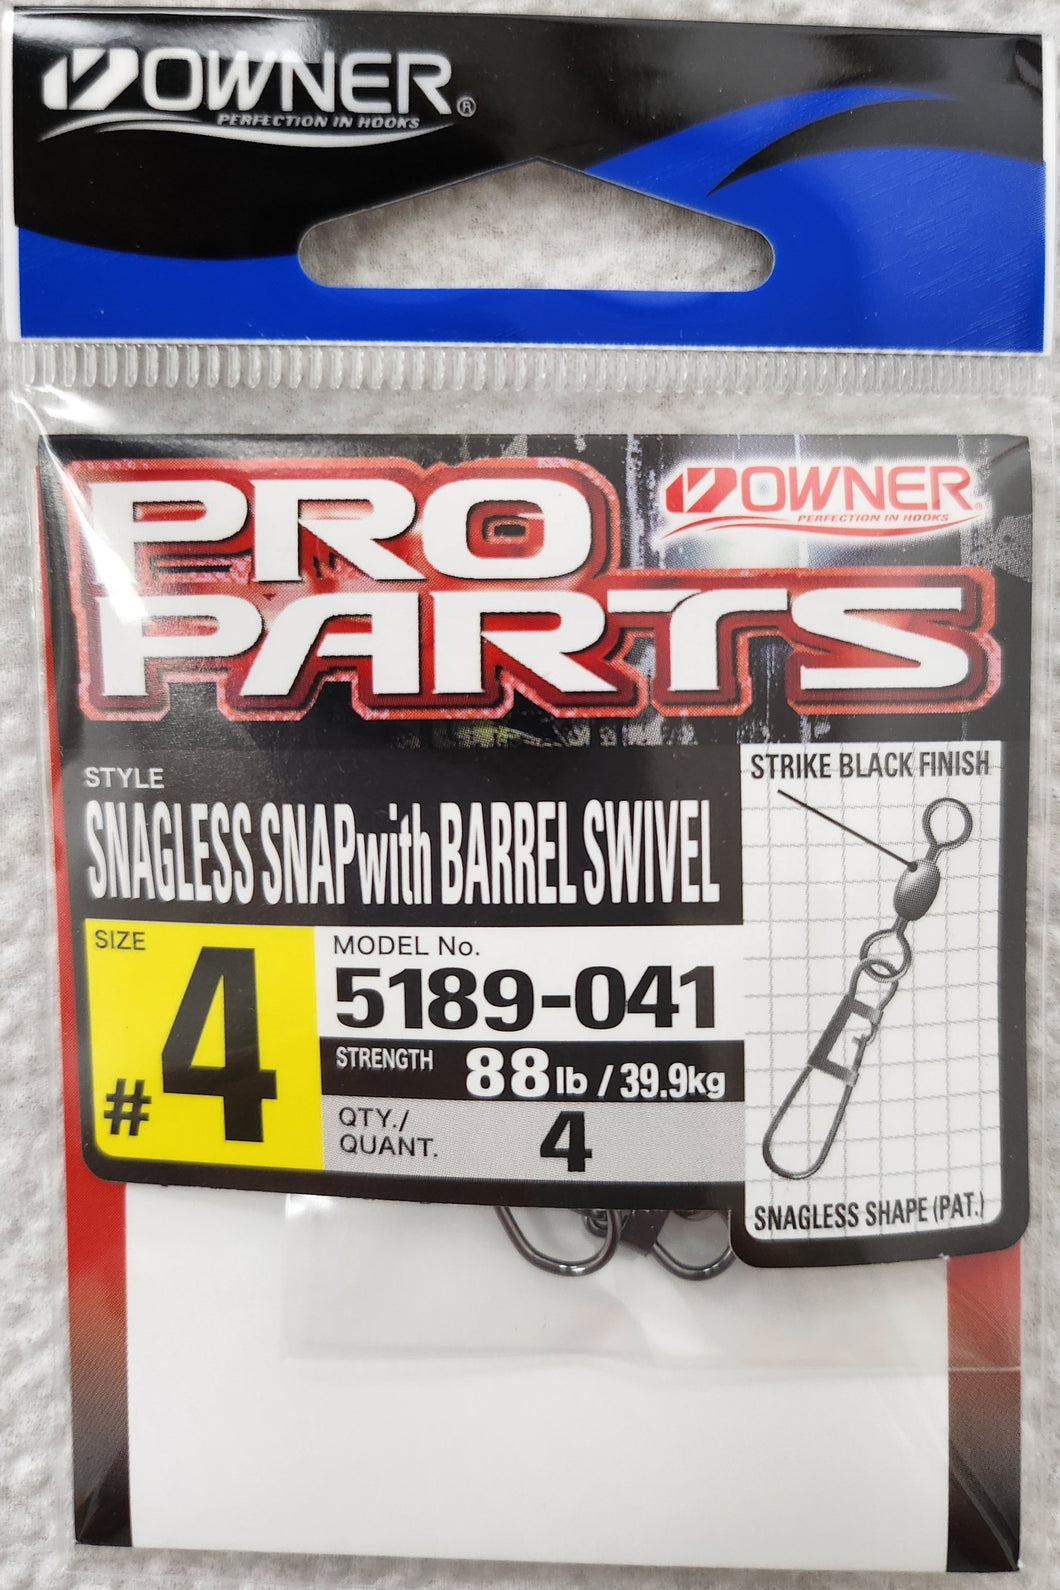 Owner Pro parts